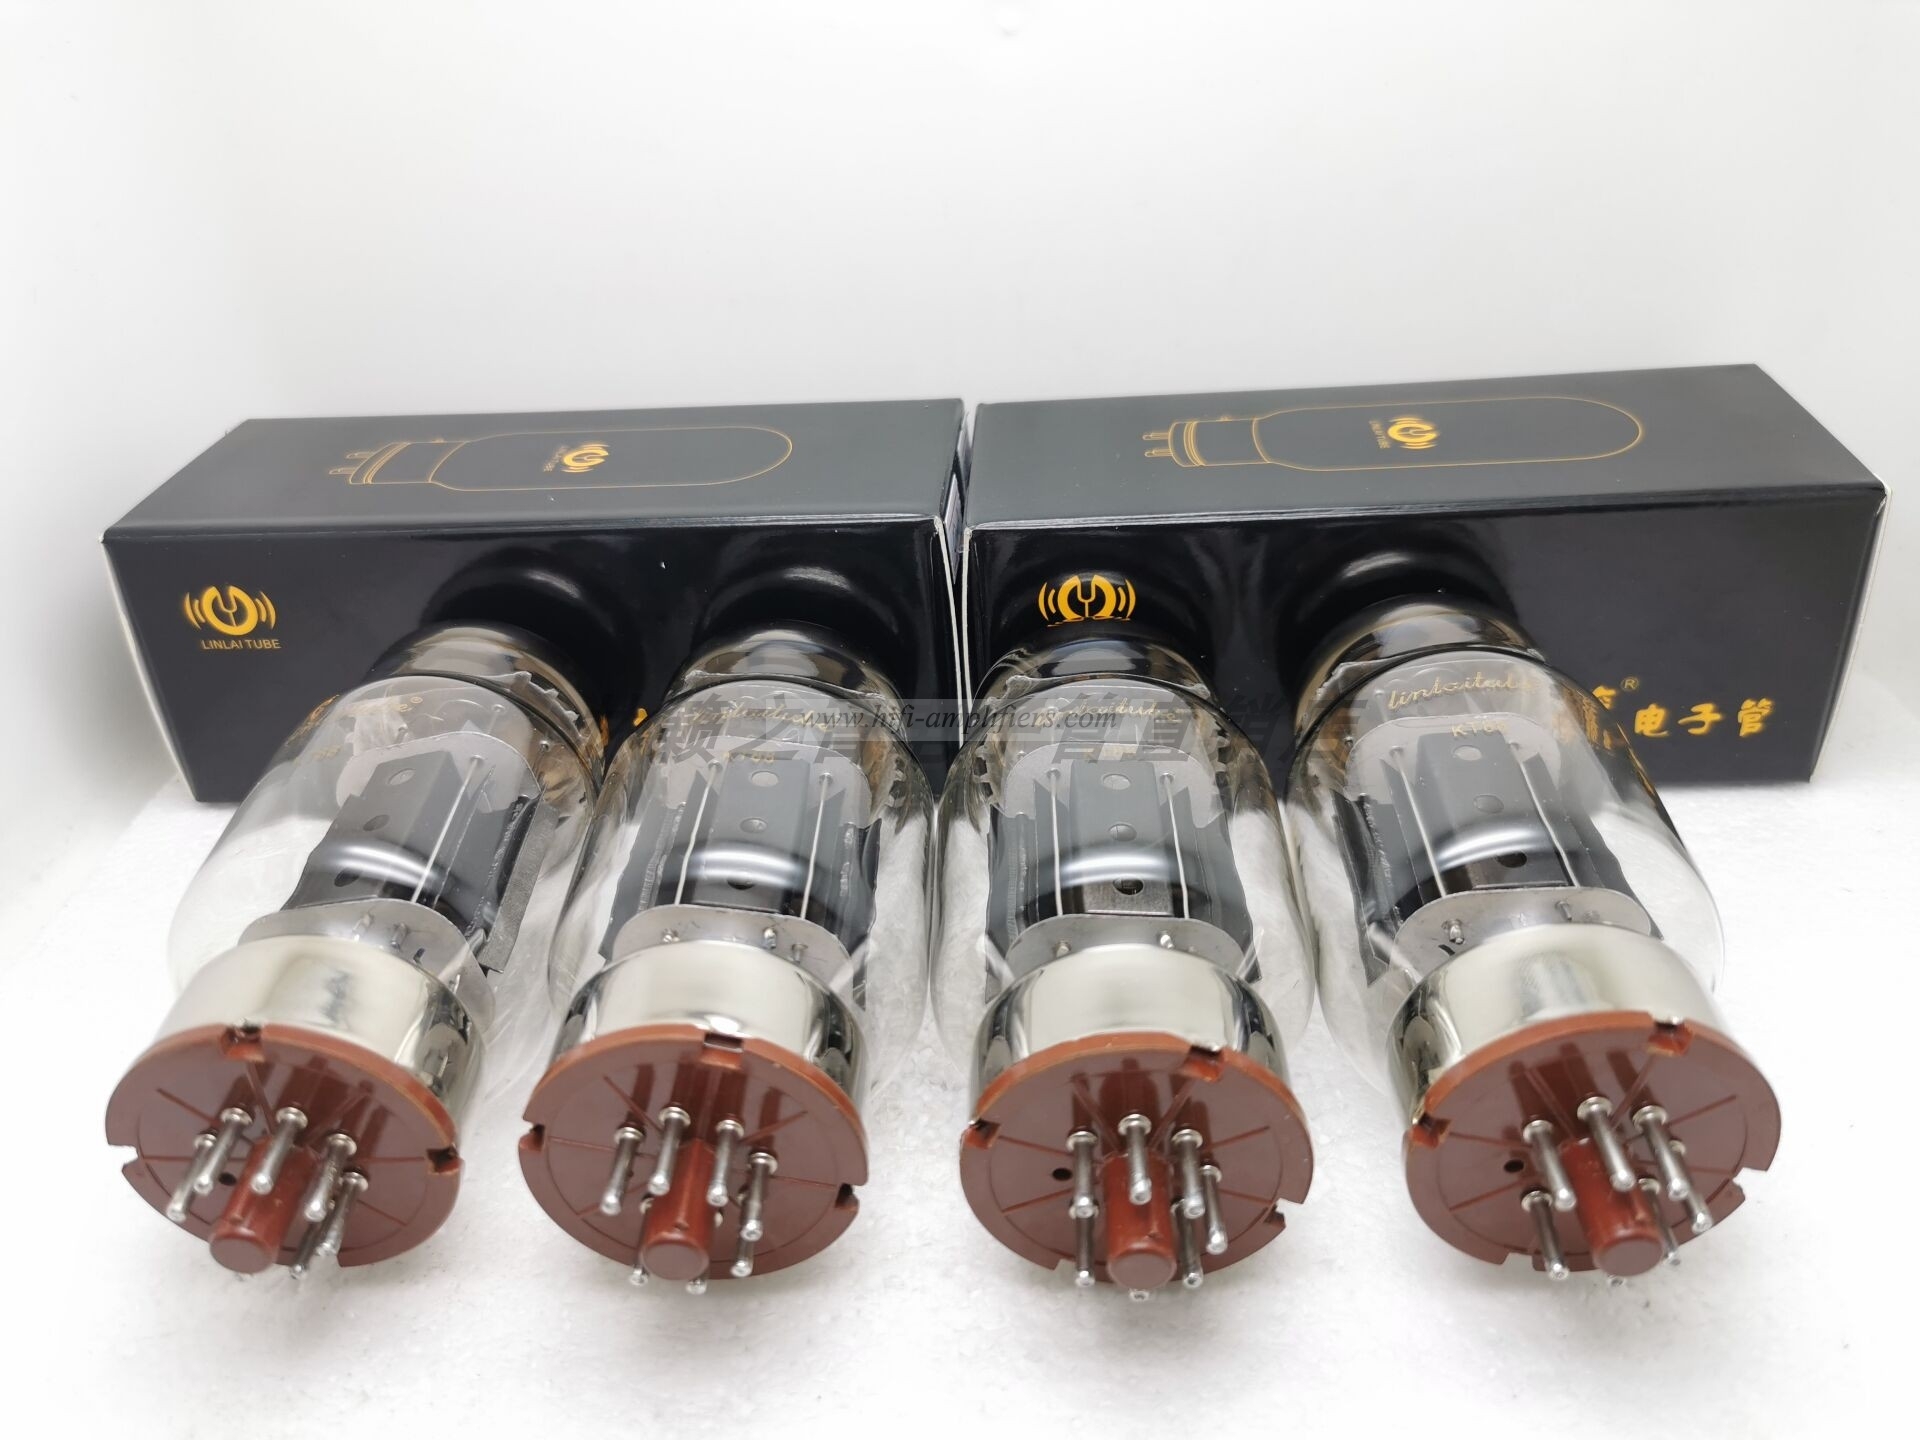 LINLAI HiFi Series KT88 Electronic Valve Vacuum Tube Matched Quad(4pcs)